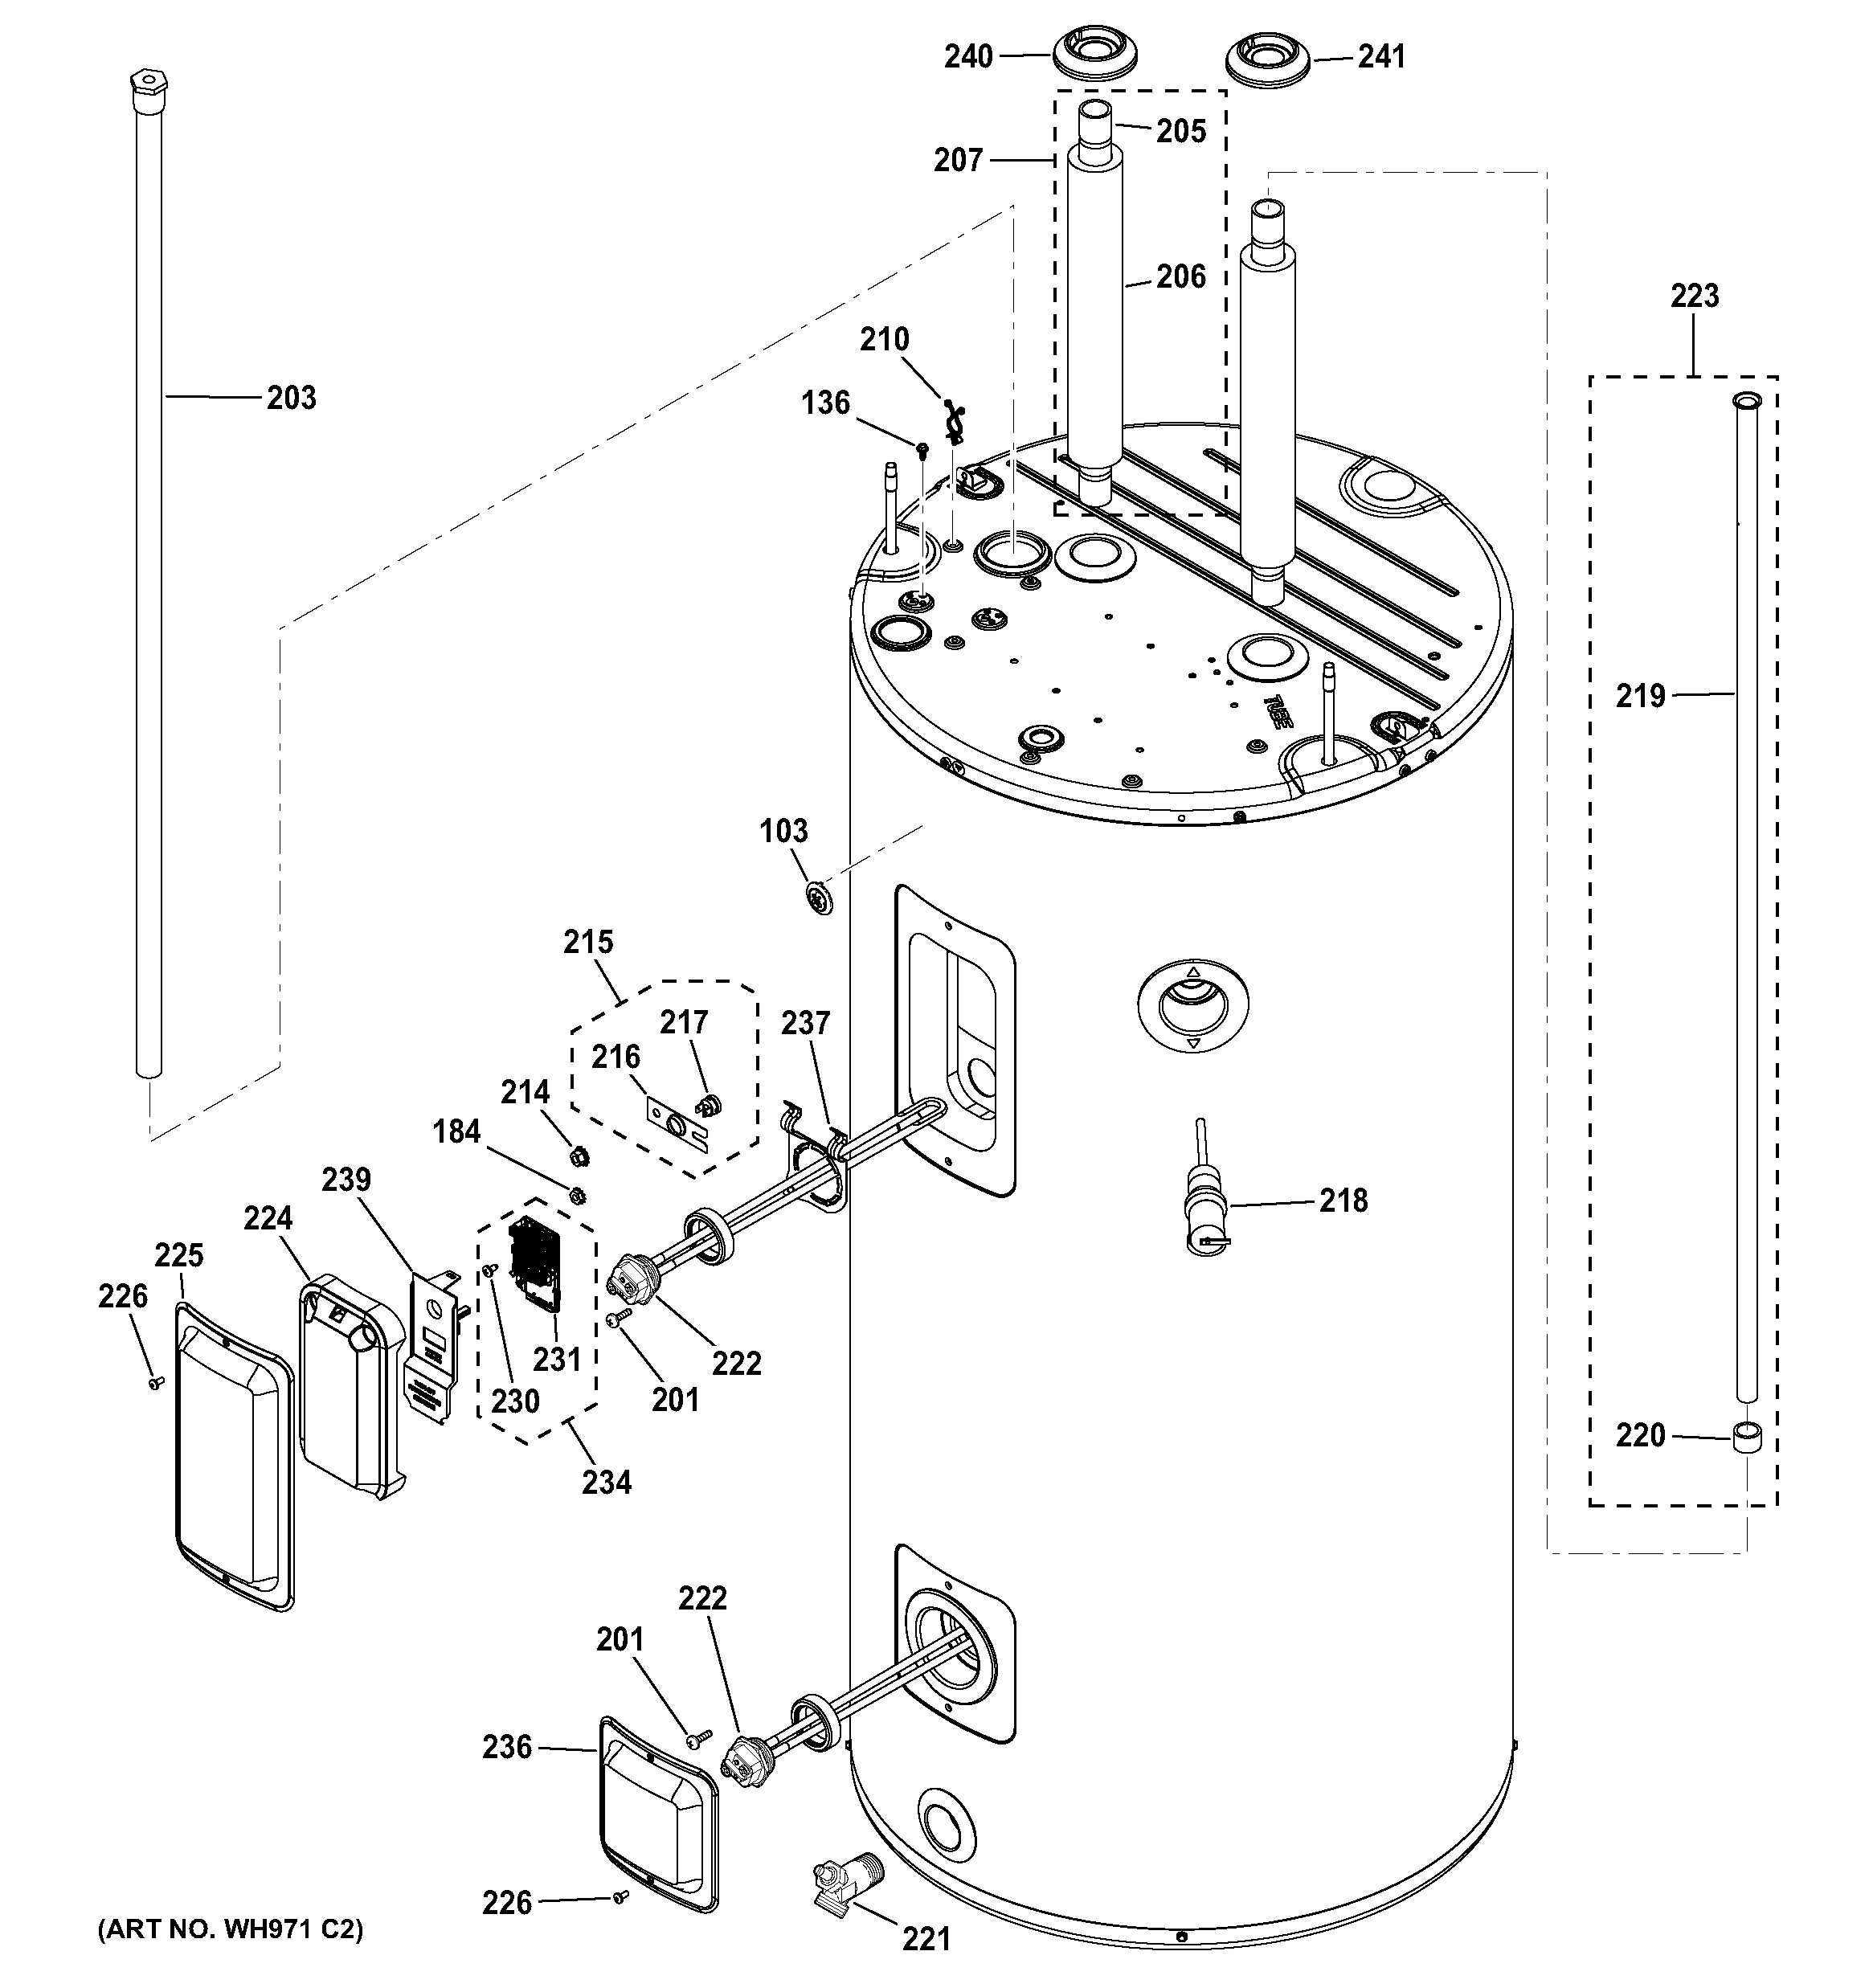 Richmond Water Heater Parts Diagram : RHEEM WATER HEATER Parts | Model